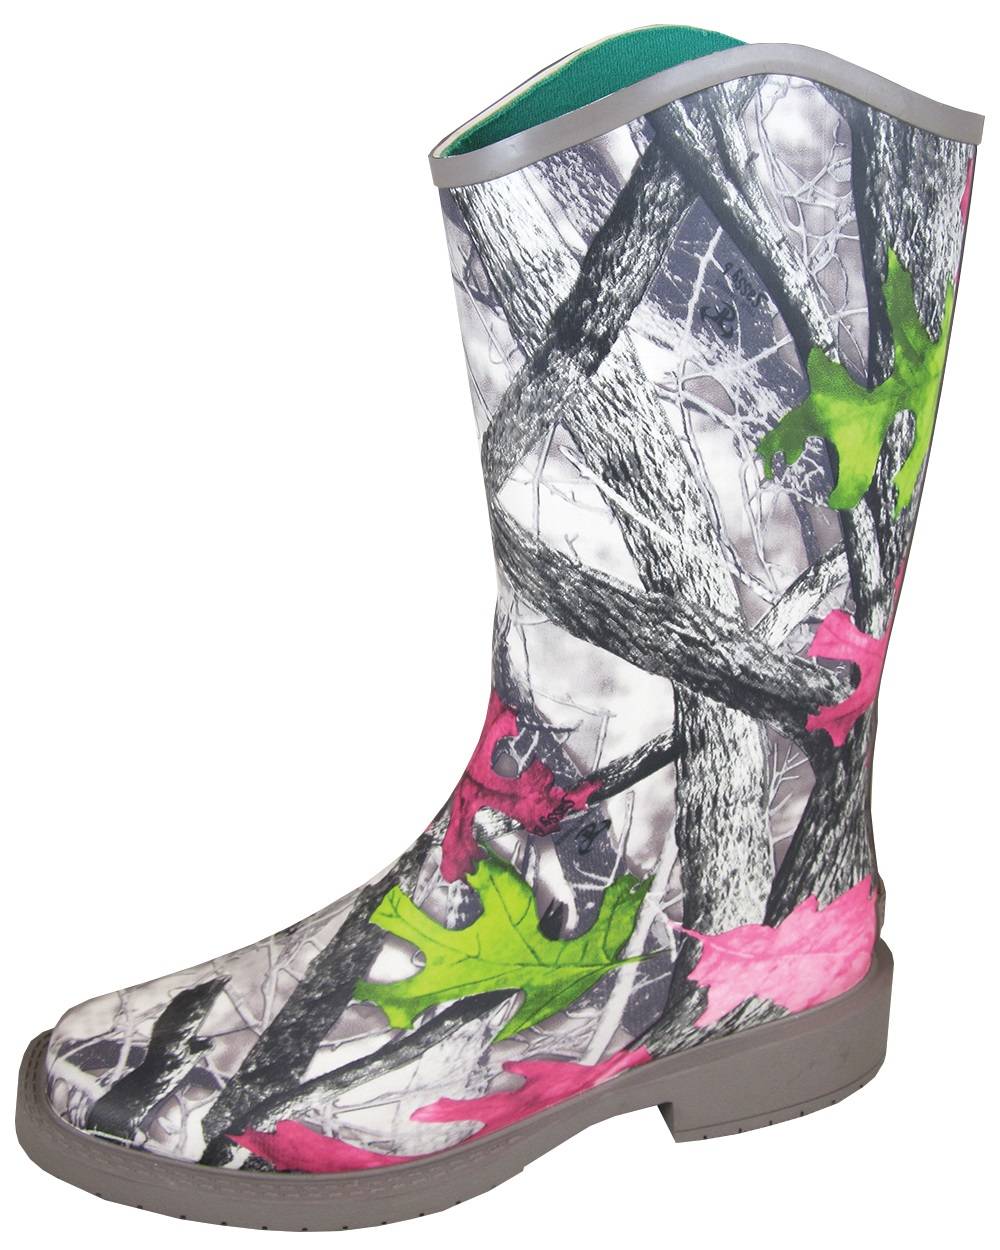 Smoky Mountain Oconee Boots - Ladies - Camo Pink